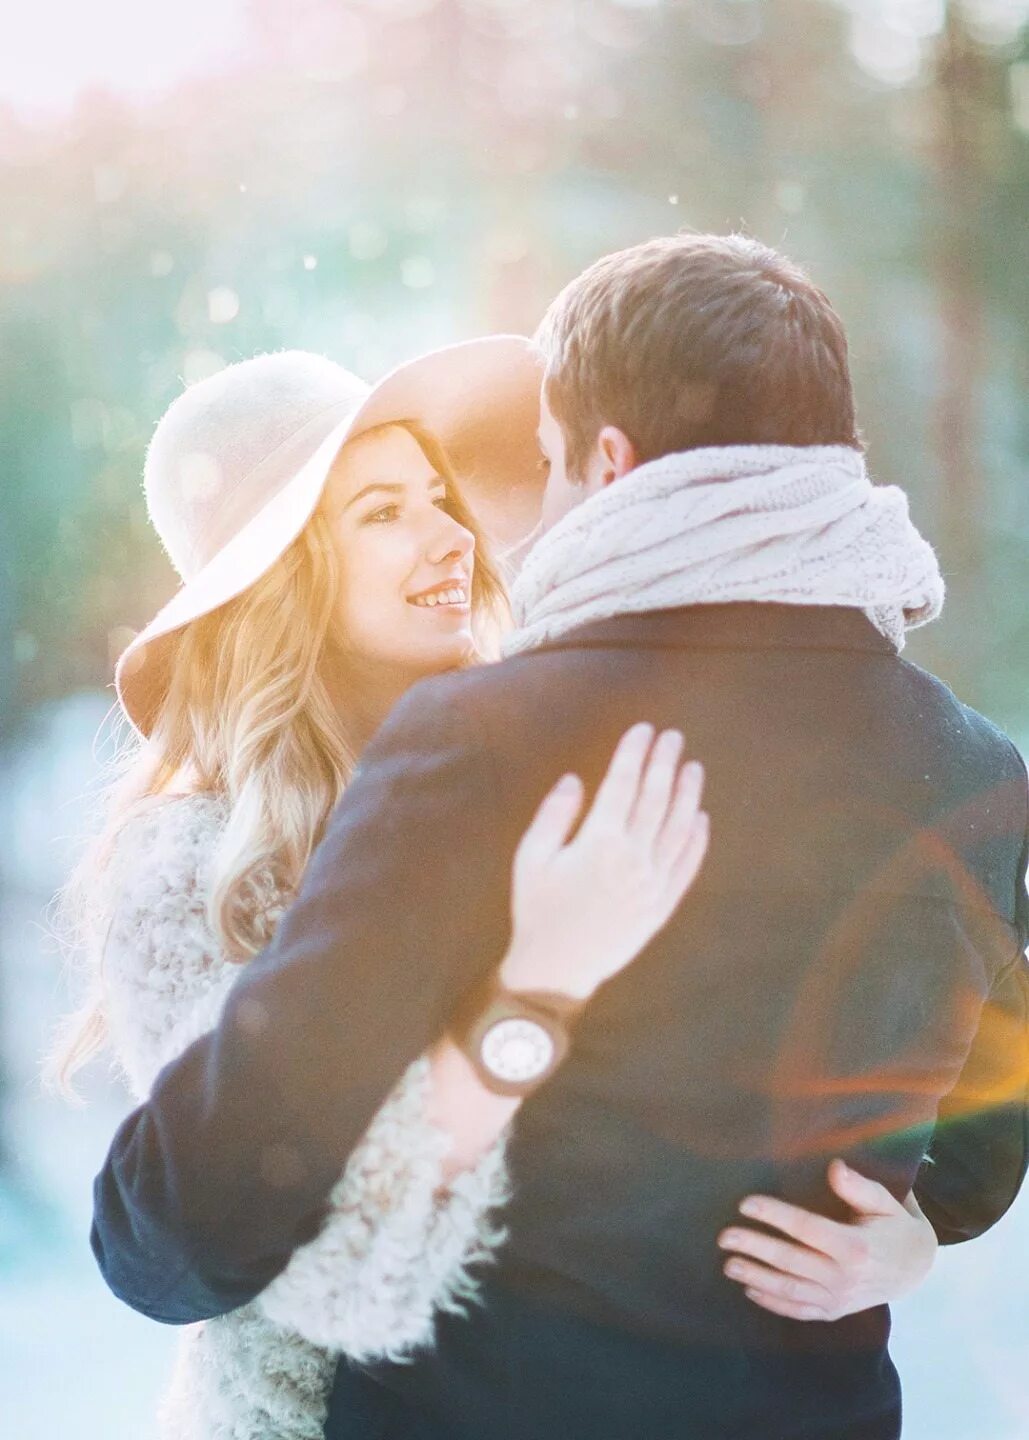 Зима любовь. Beautiful Love stories. Красивые картинки зима любовь двое. Love story на финском заливе. Пара радуется